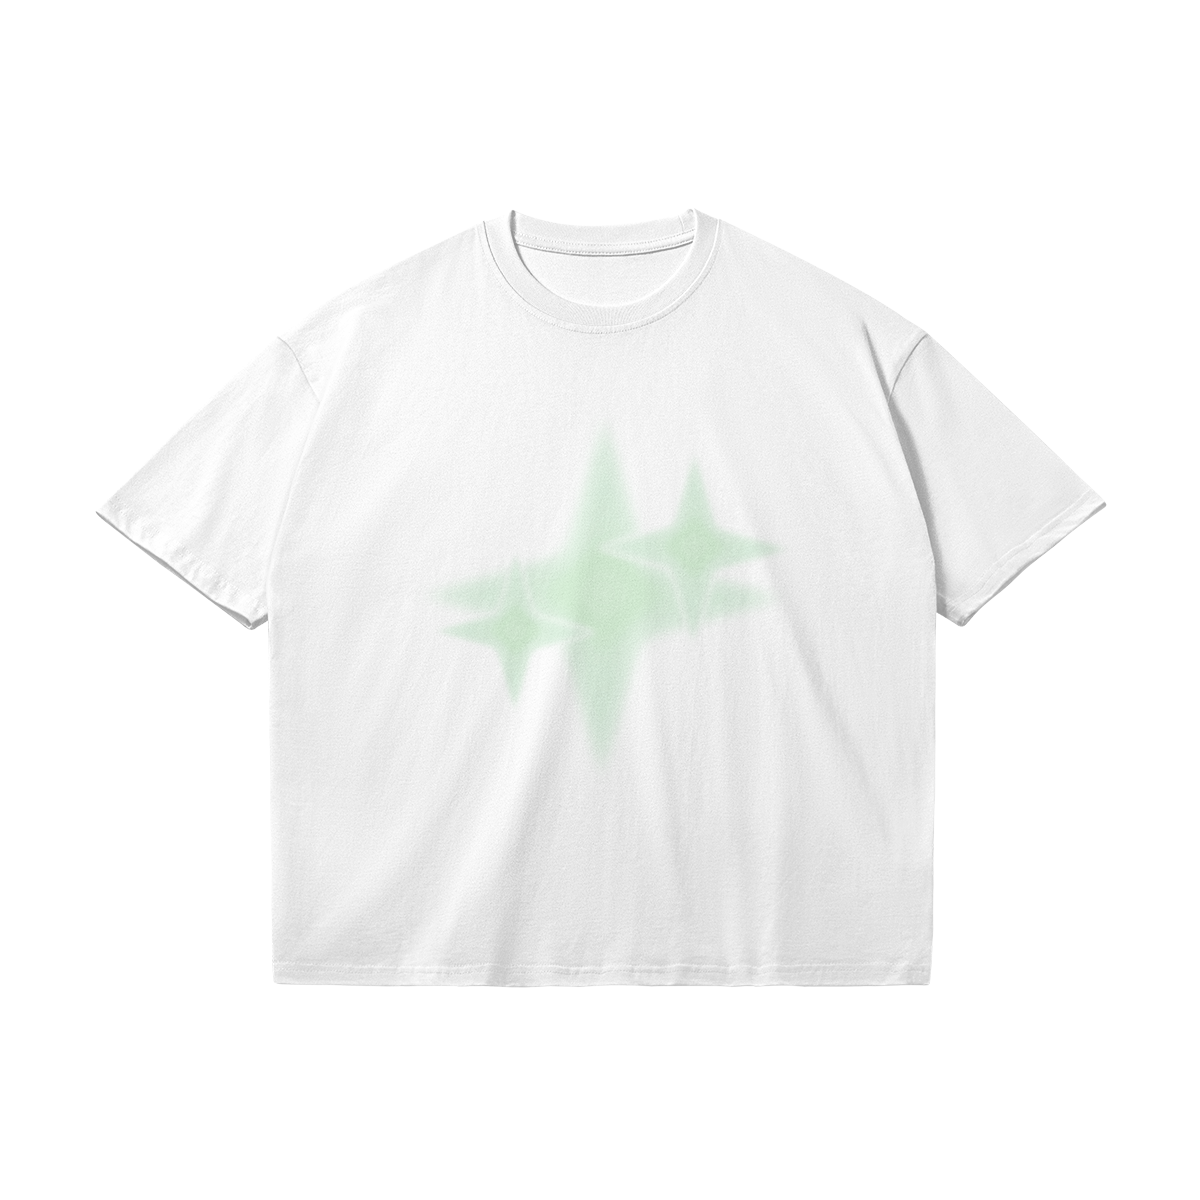 3Star T-shirt